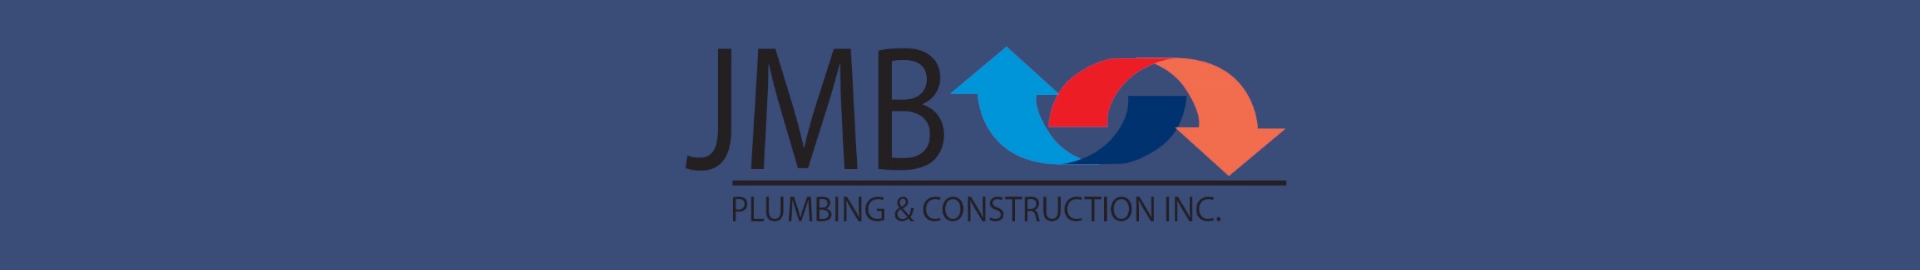 JMB Plumbing & Construction Logo